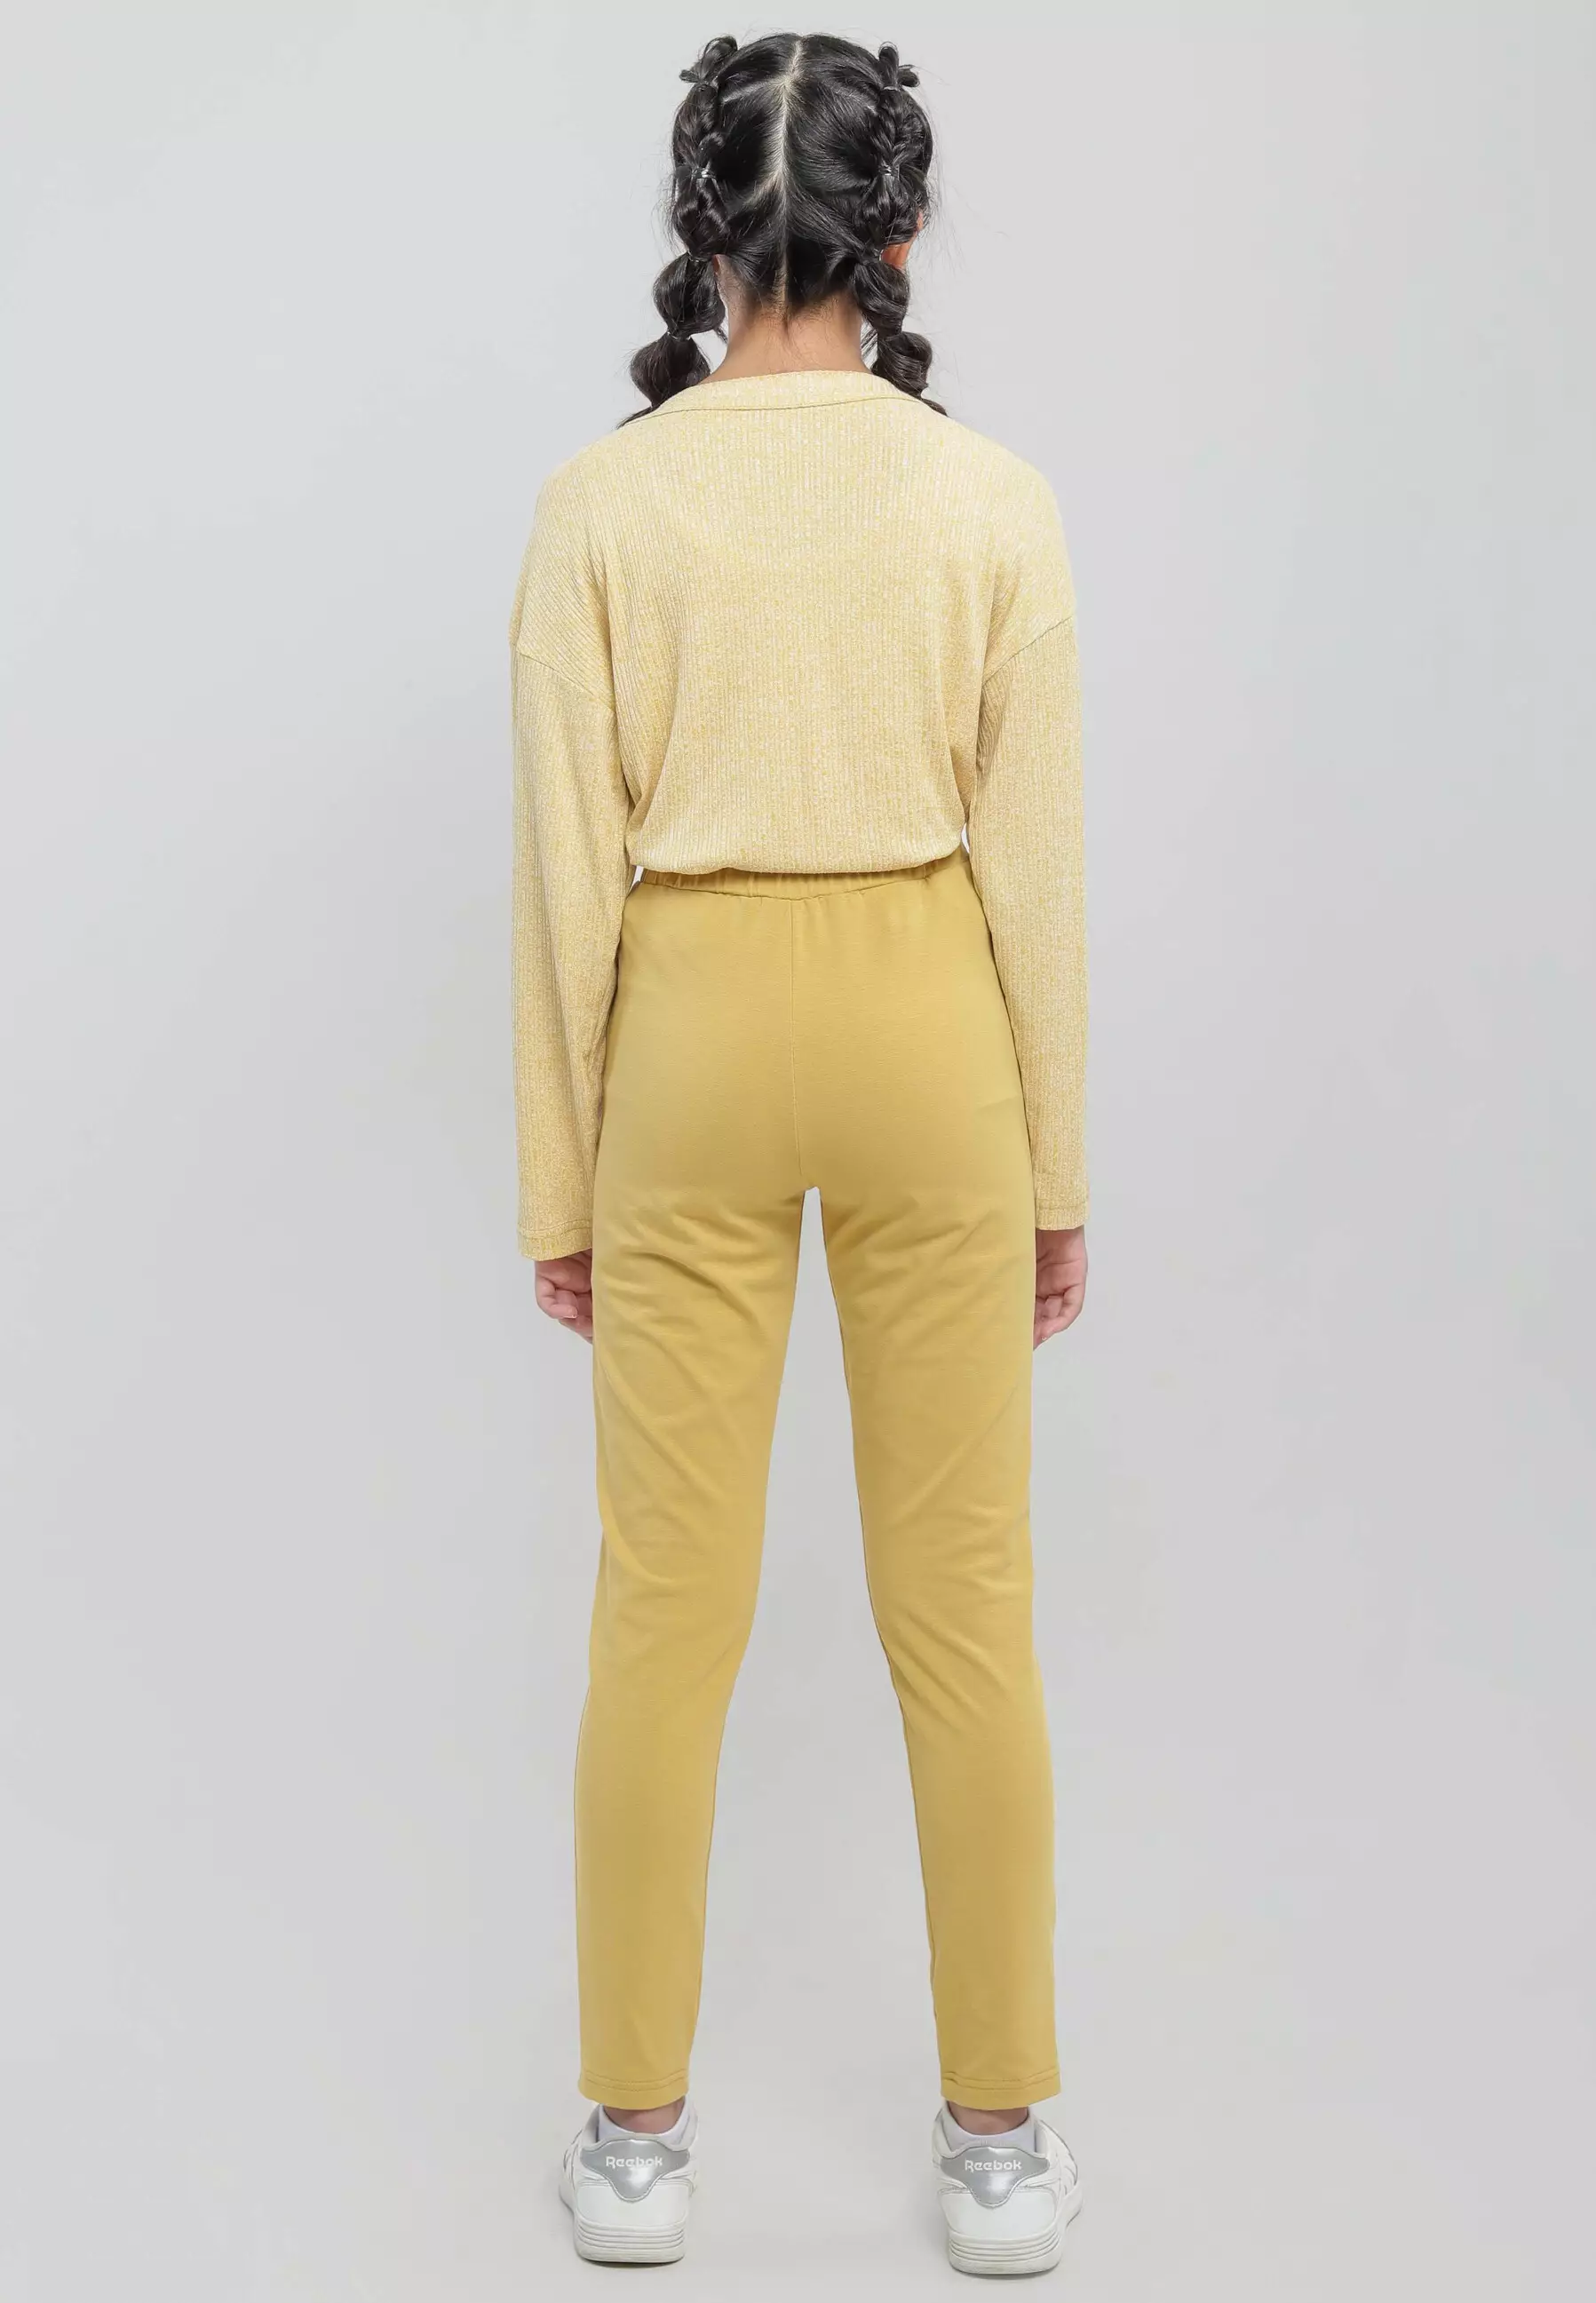 Kid Wear] 2 Design Girl Slim Cut Long Pants (Plain & Polka Dot) / Seluar  Slim Cut Panjang Polka Dot Budak Perempuan